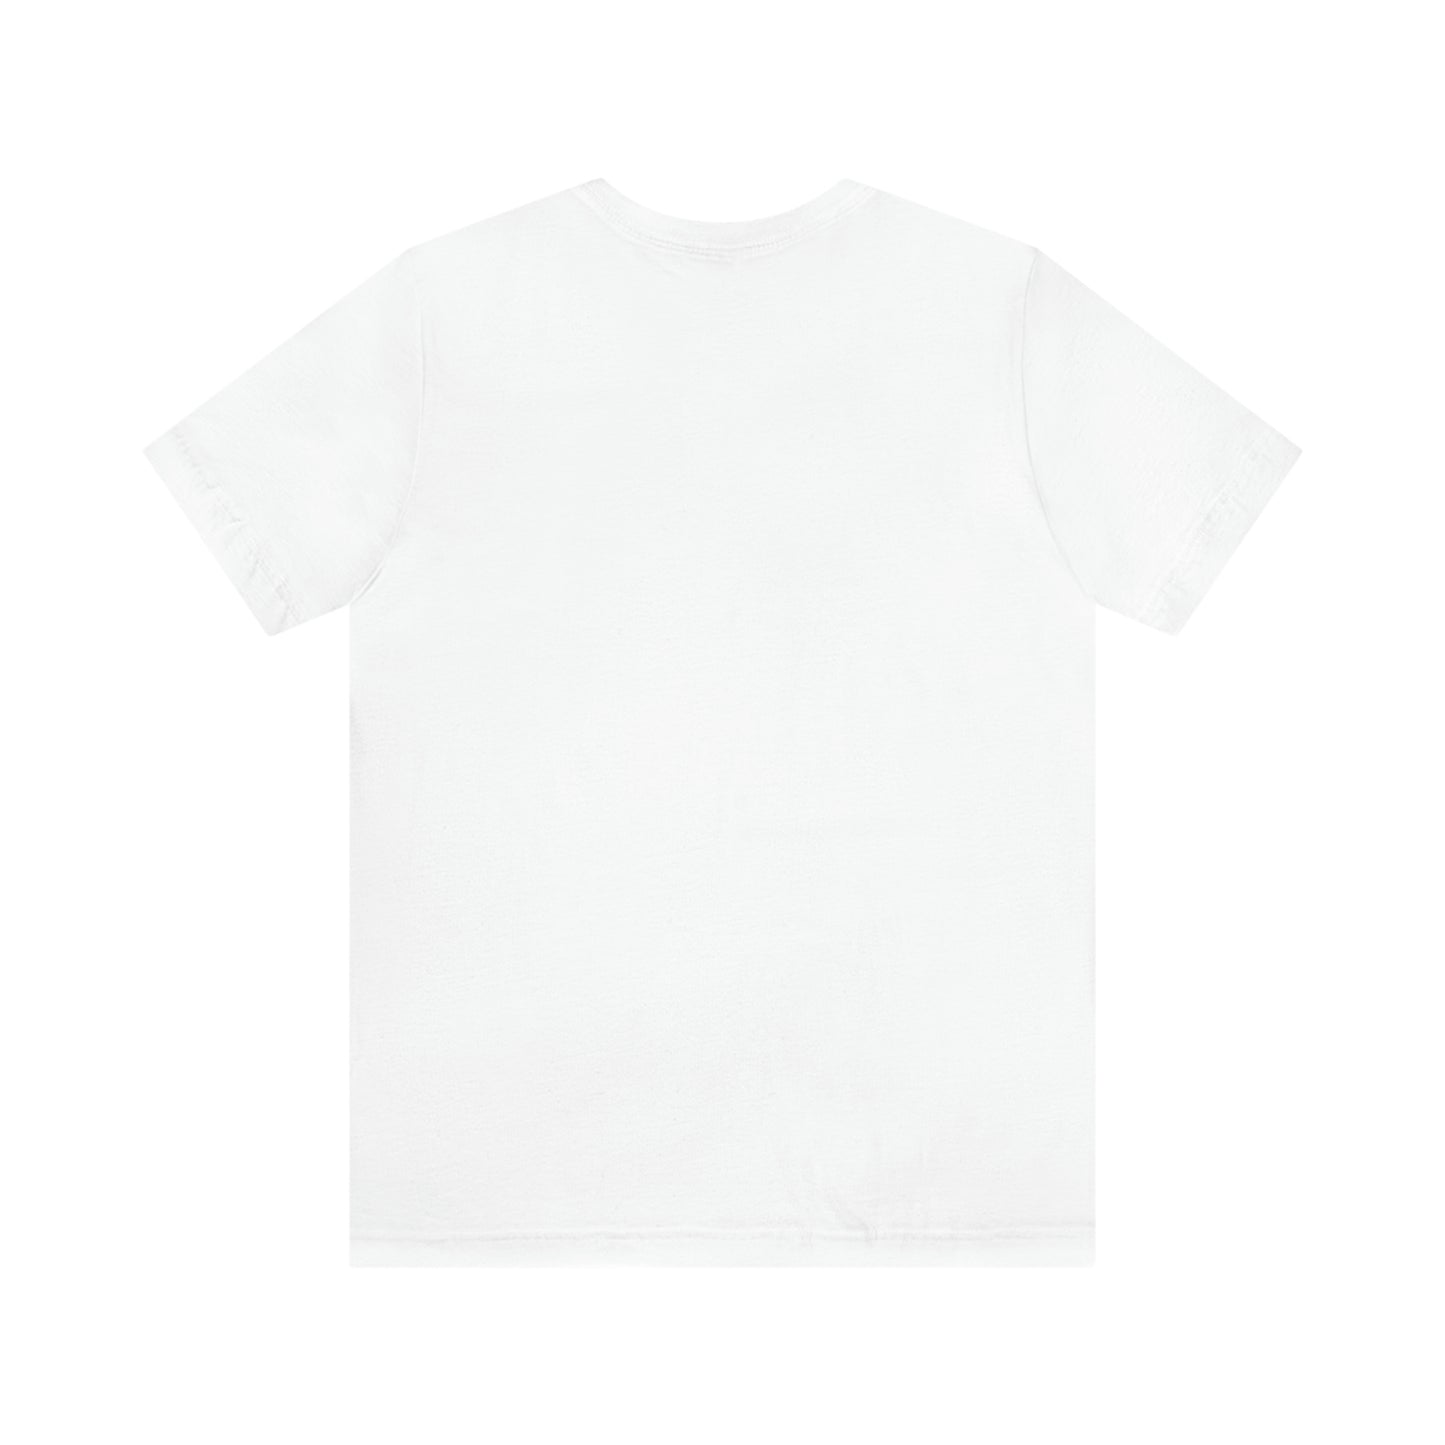 Premium Unisex Crewneck Play Hard T-shirt | Play Hard  White Color Shirt | Play Hard Baseball T-Shirt | Black Logo